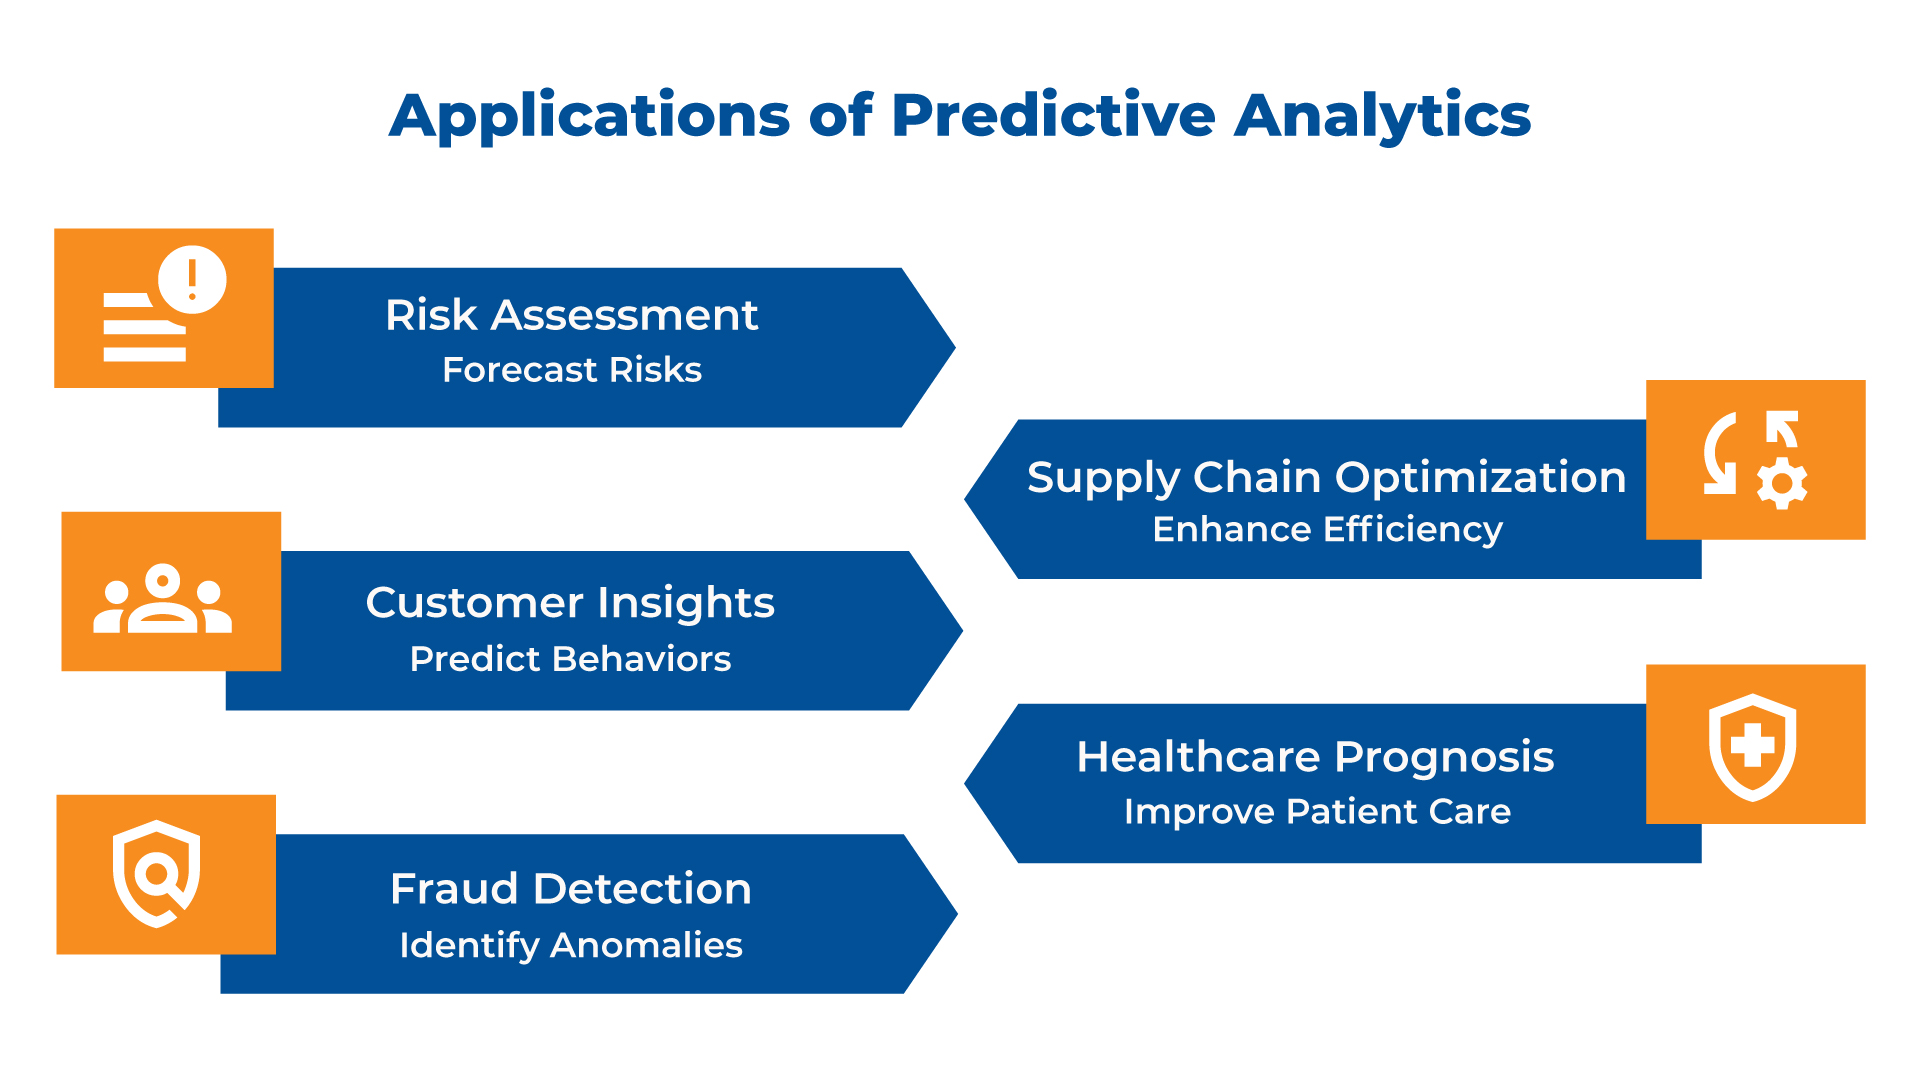 Applications of Predictive Analytics
